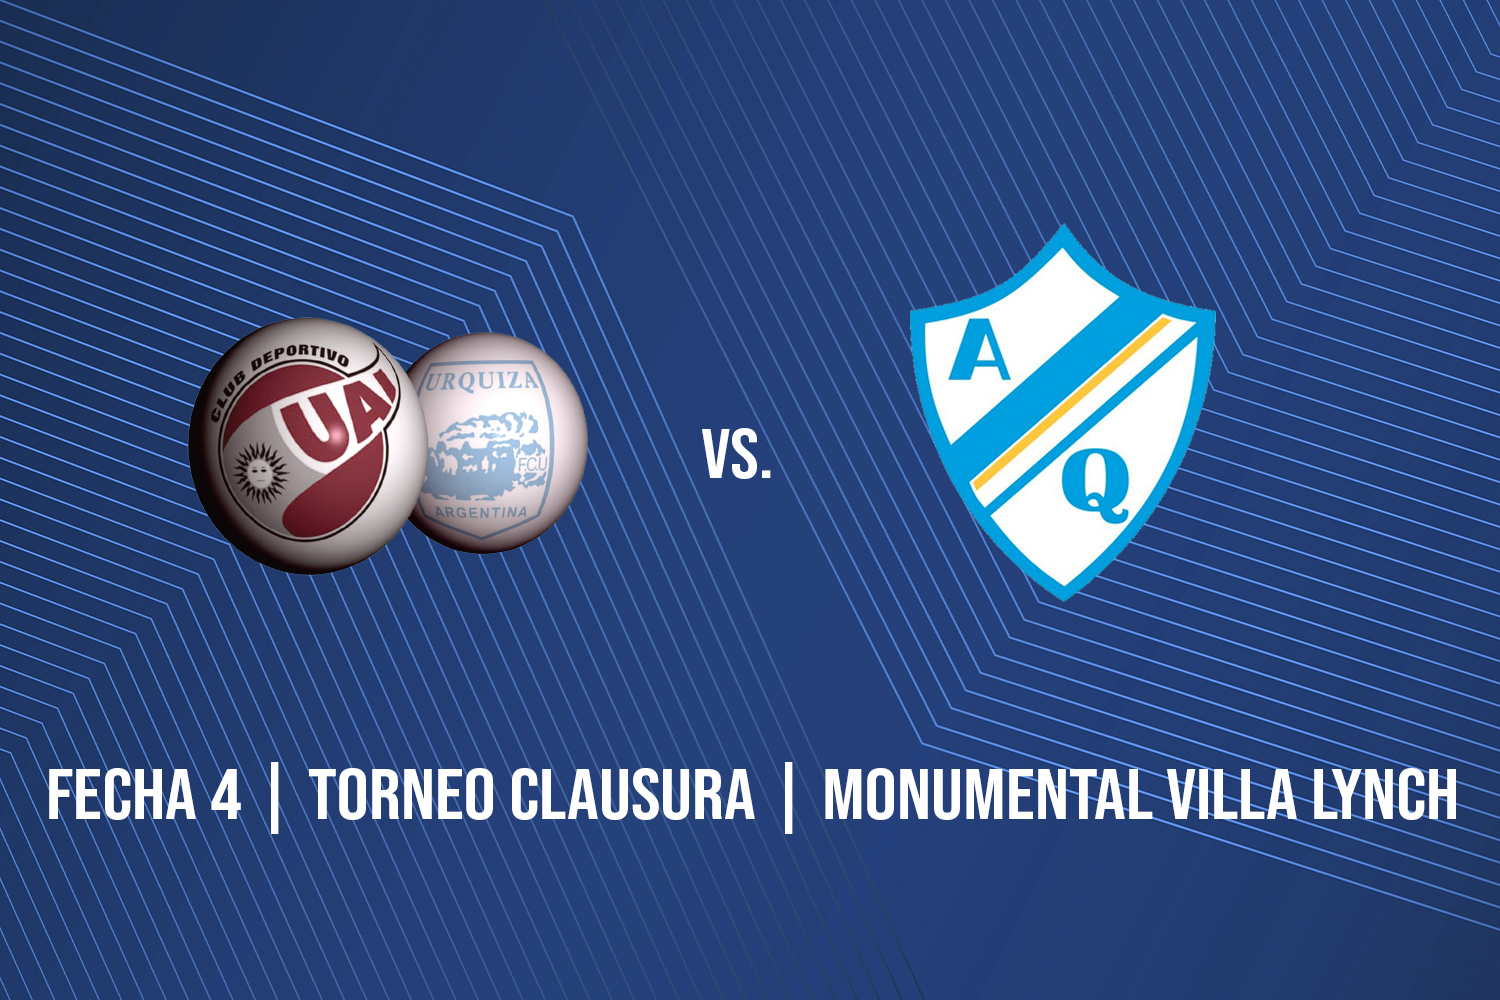 Argentino de Quilmes vs. UAI Urquiza - TyC Sports